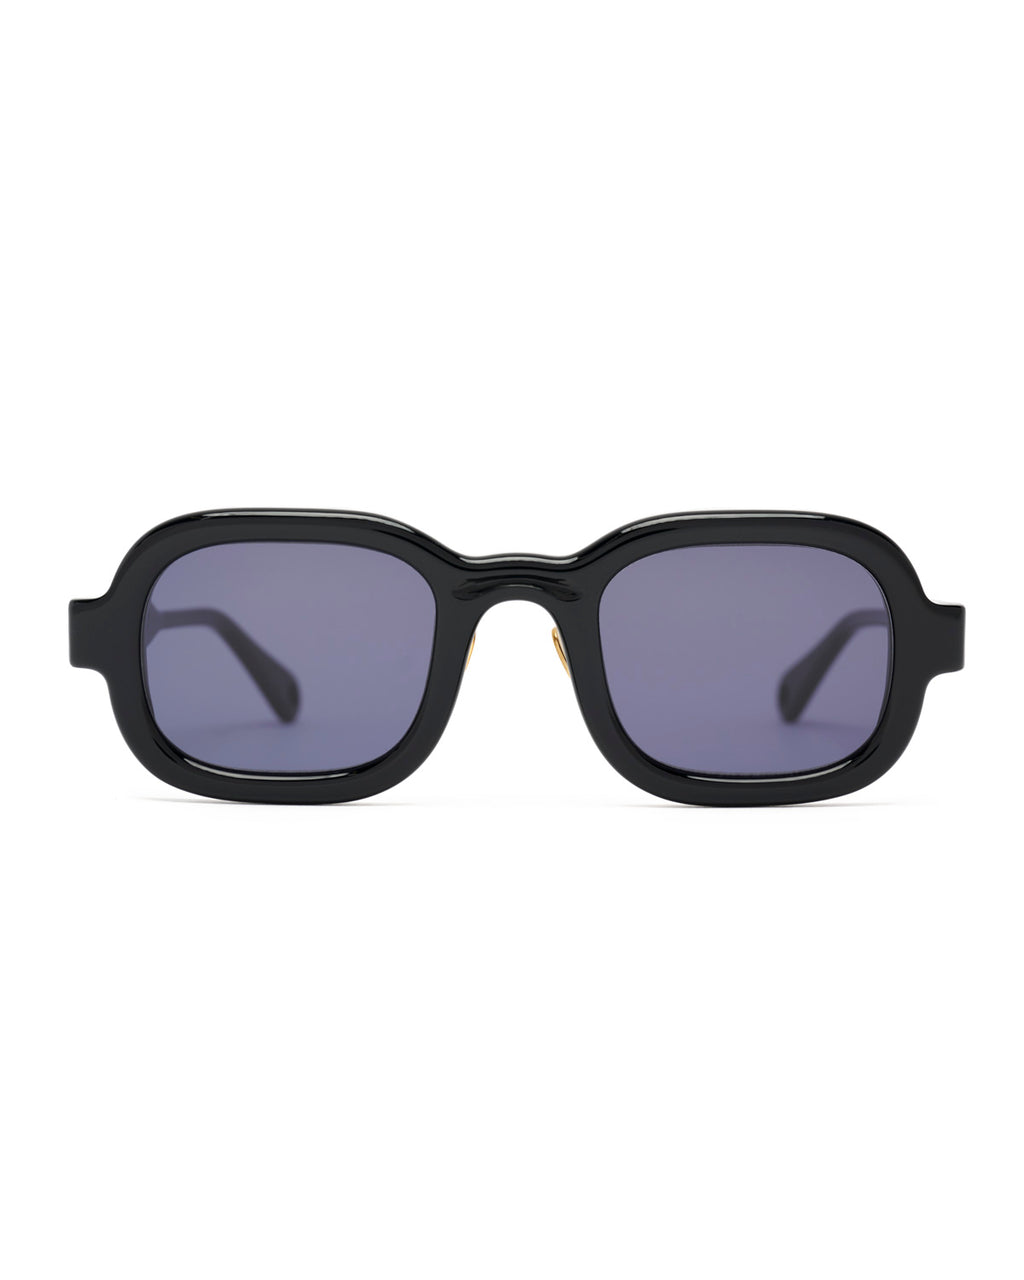 Newman Post Modern Primitive Eye Protection - Black/Blue 1